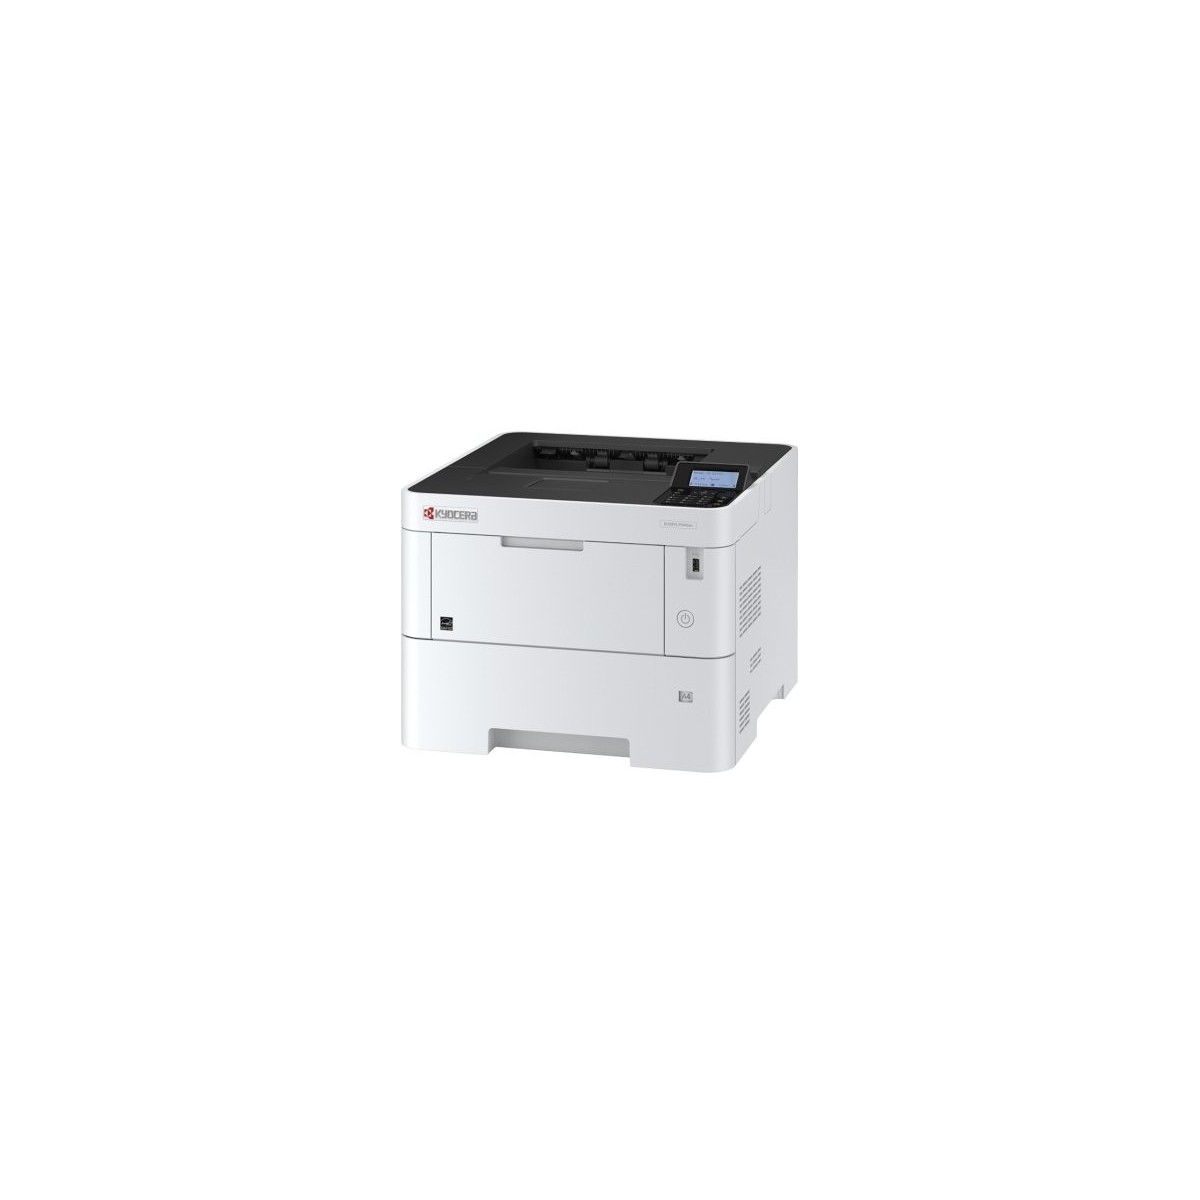 Kyocera ECOSYS P3155dn/KL3 - Laser - 1200 x 1200 DPI - A4 - 55 ppm - Duplex printing - Black - White